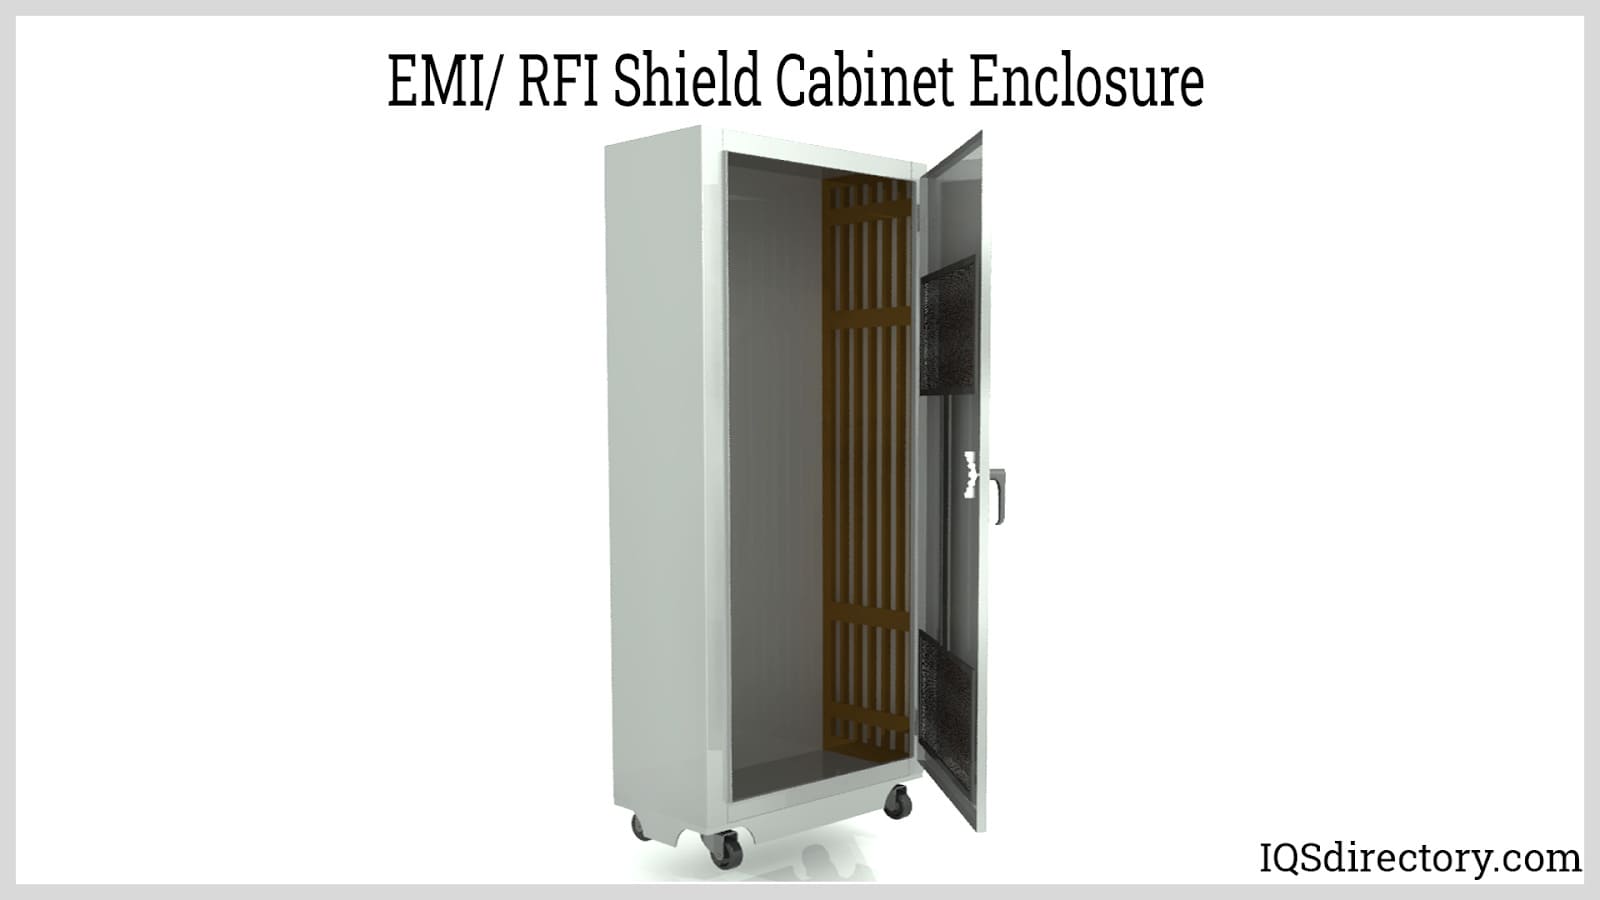 EMI/ RFI Shield Cabinet Enclosure